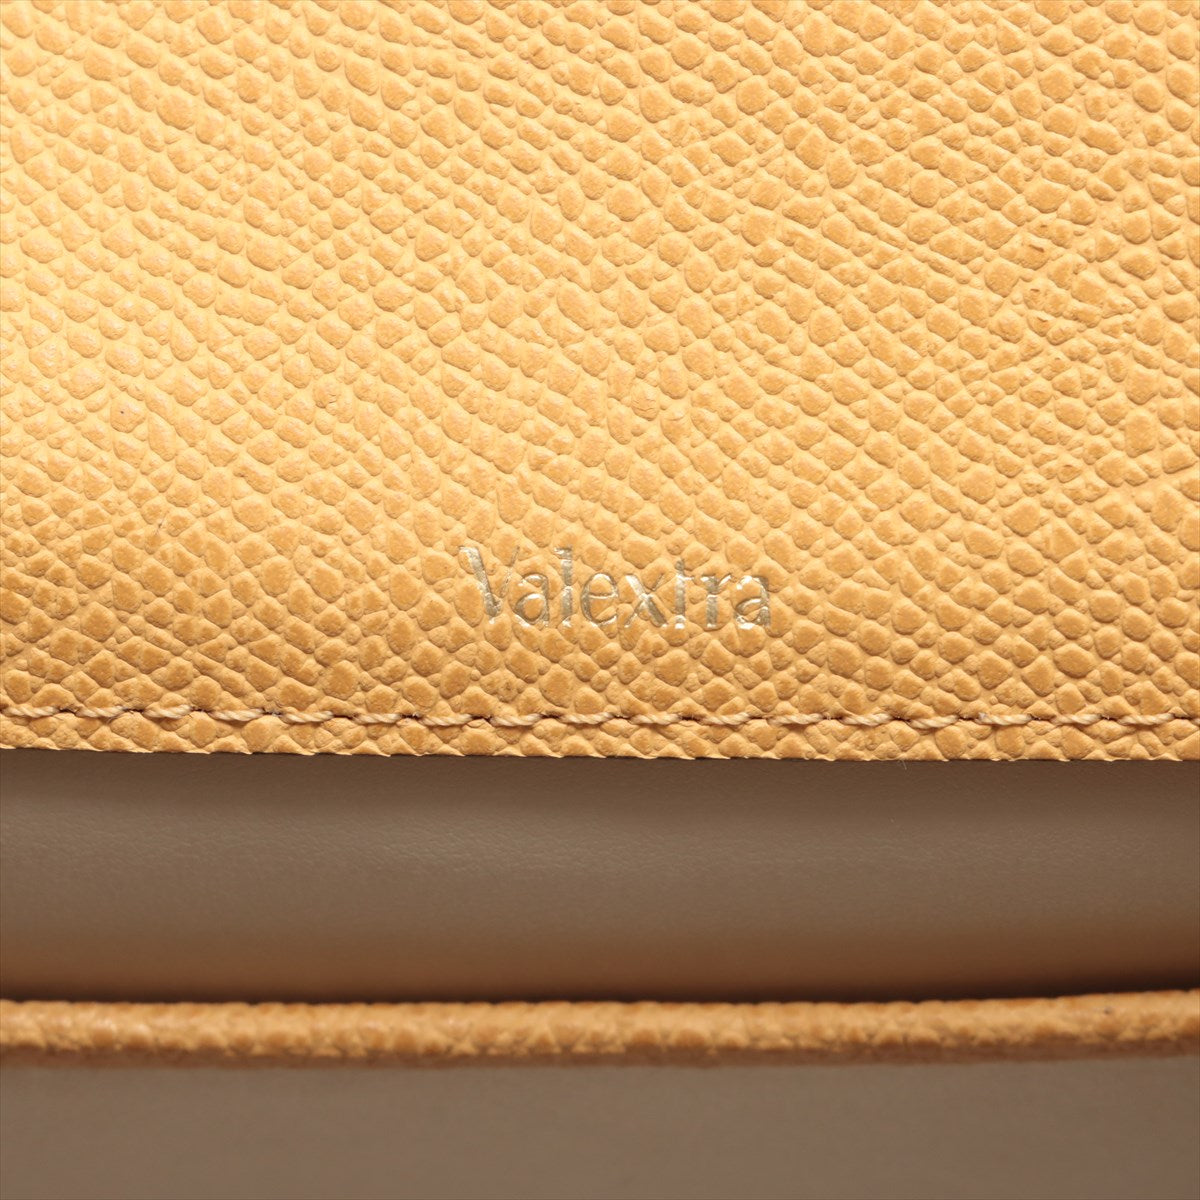 Valextra Iside Mini Raffia x leather 2way handbag Pink 6/10 Bees